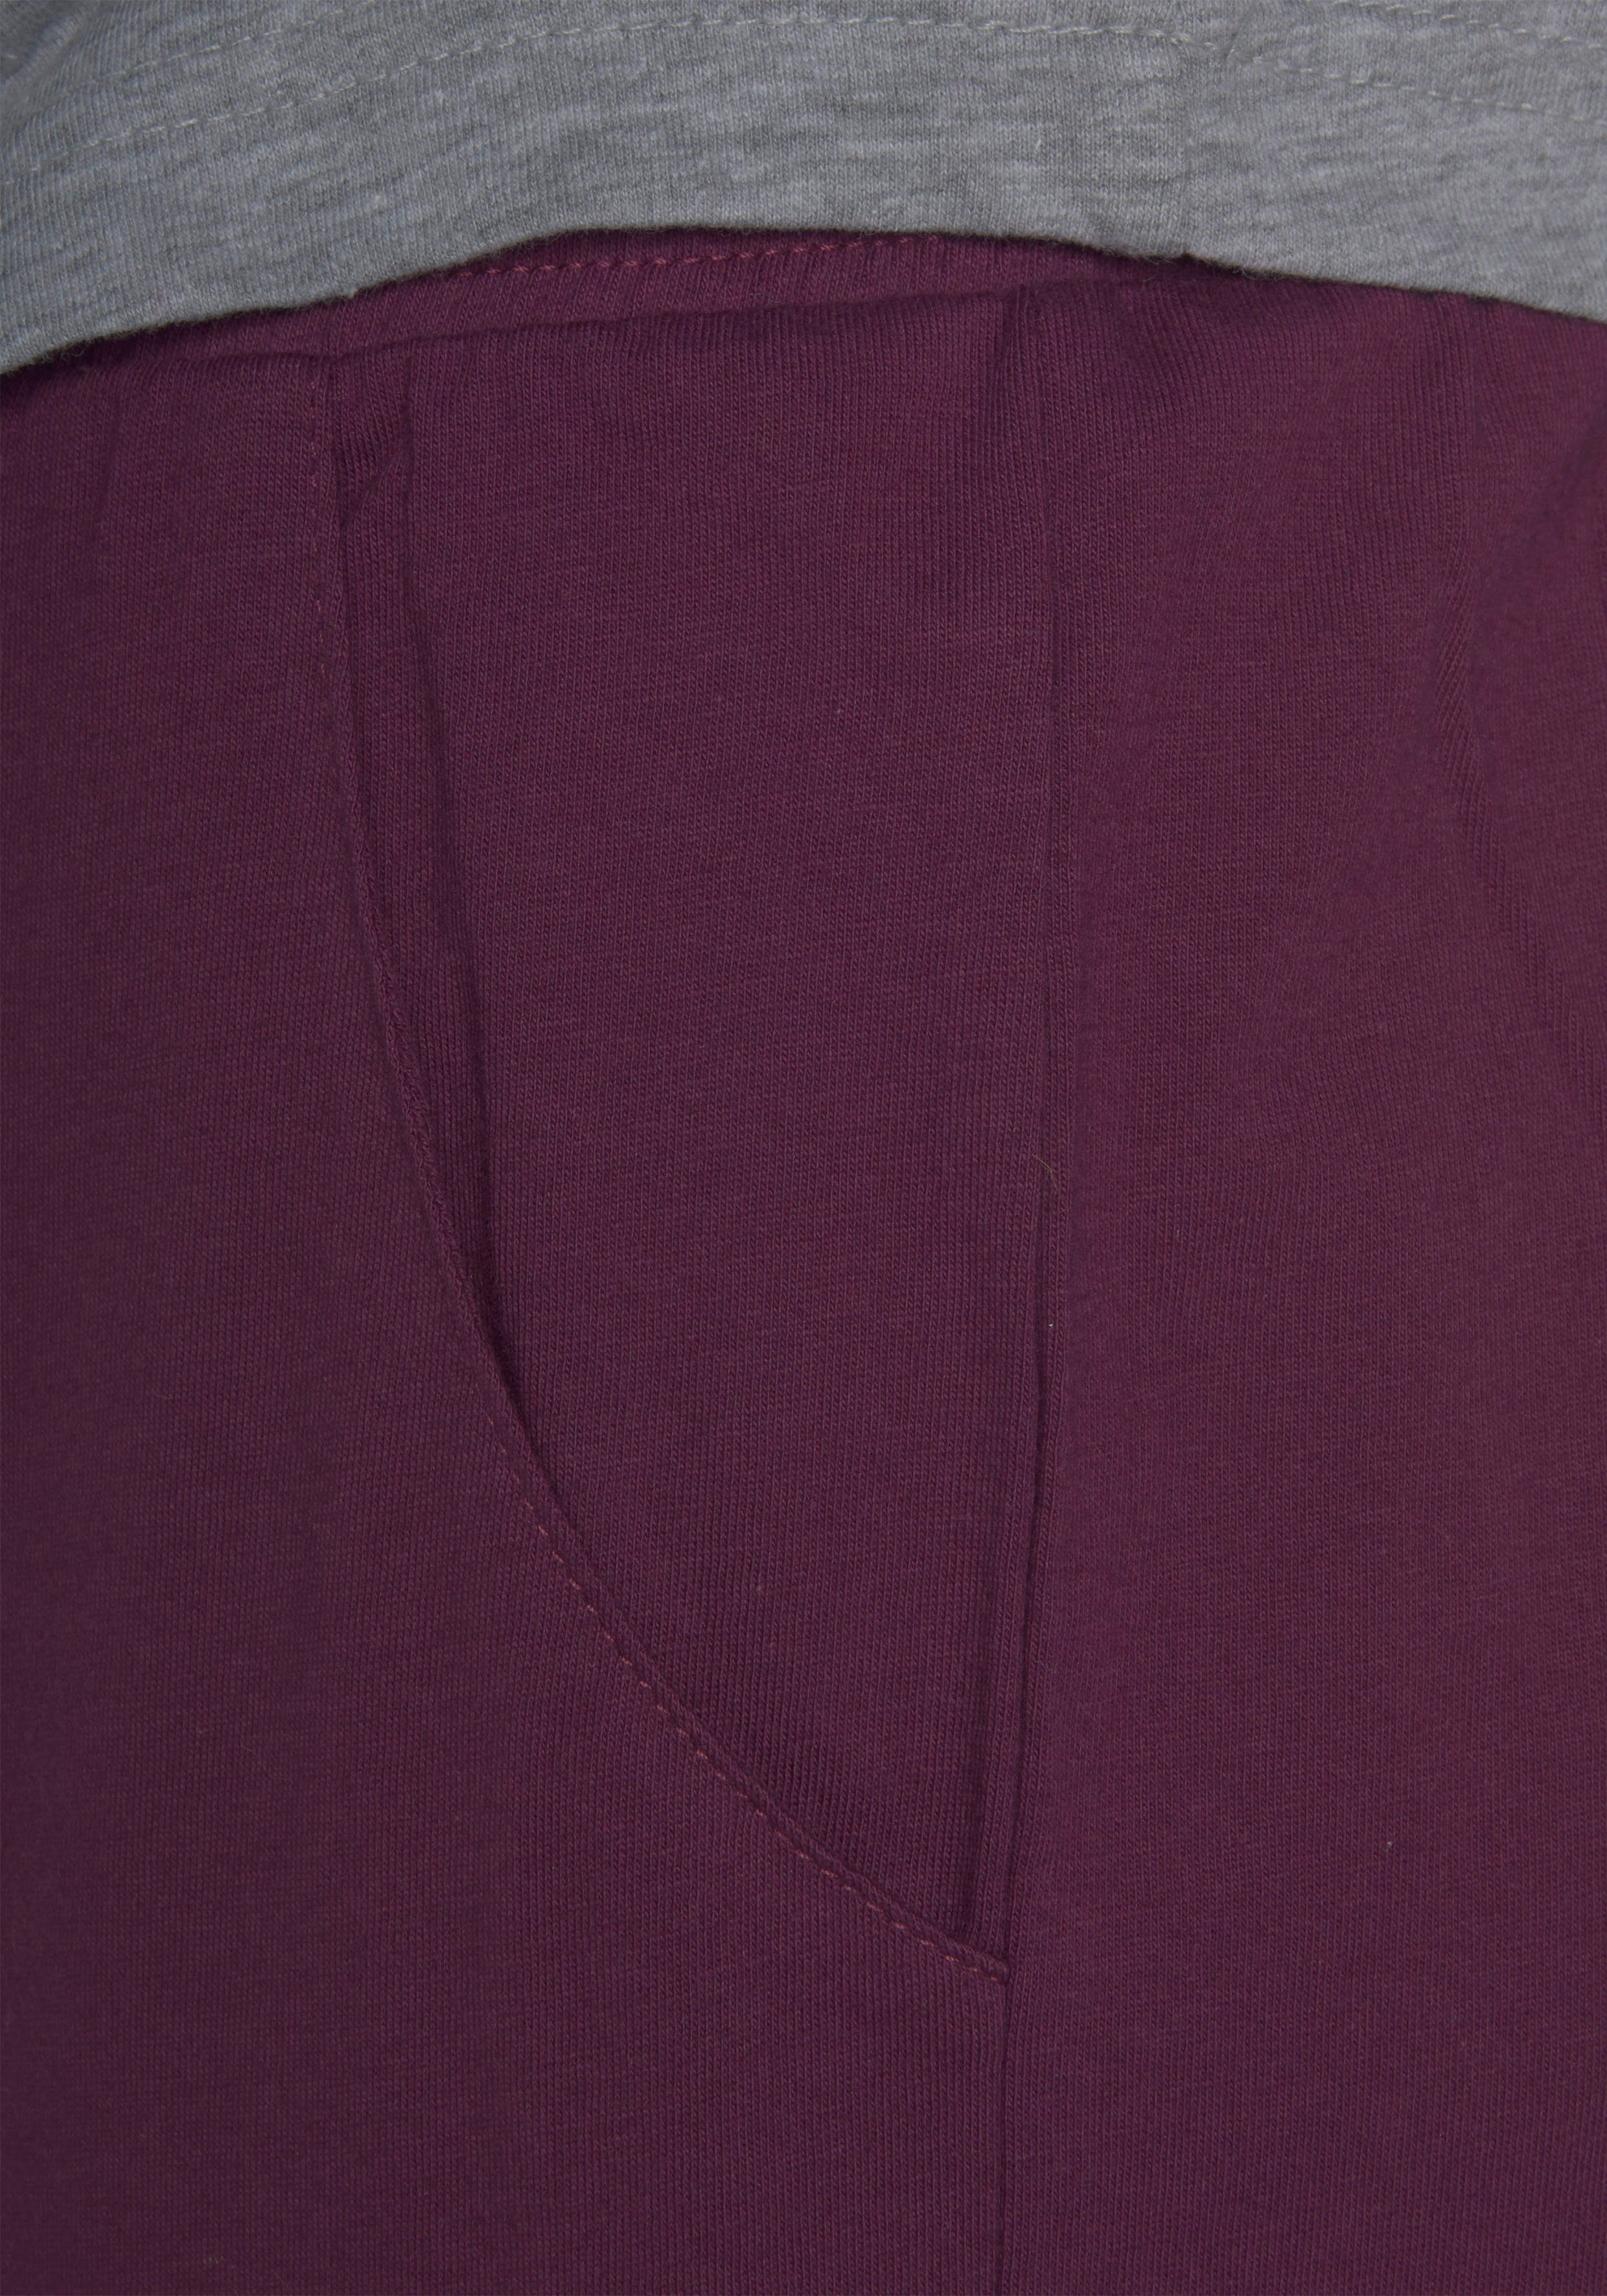 tlg., 1 kontrastfarbenen Raglanärmeln bordeaux-grau-meliert mit (2 Pyjama KangaROOS Stück)